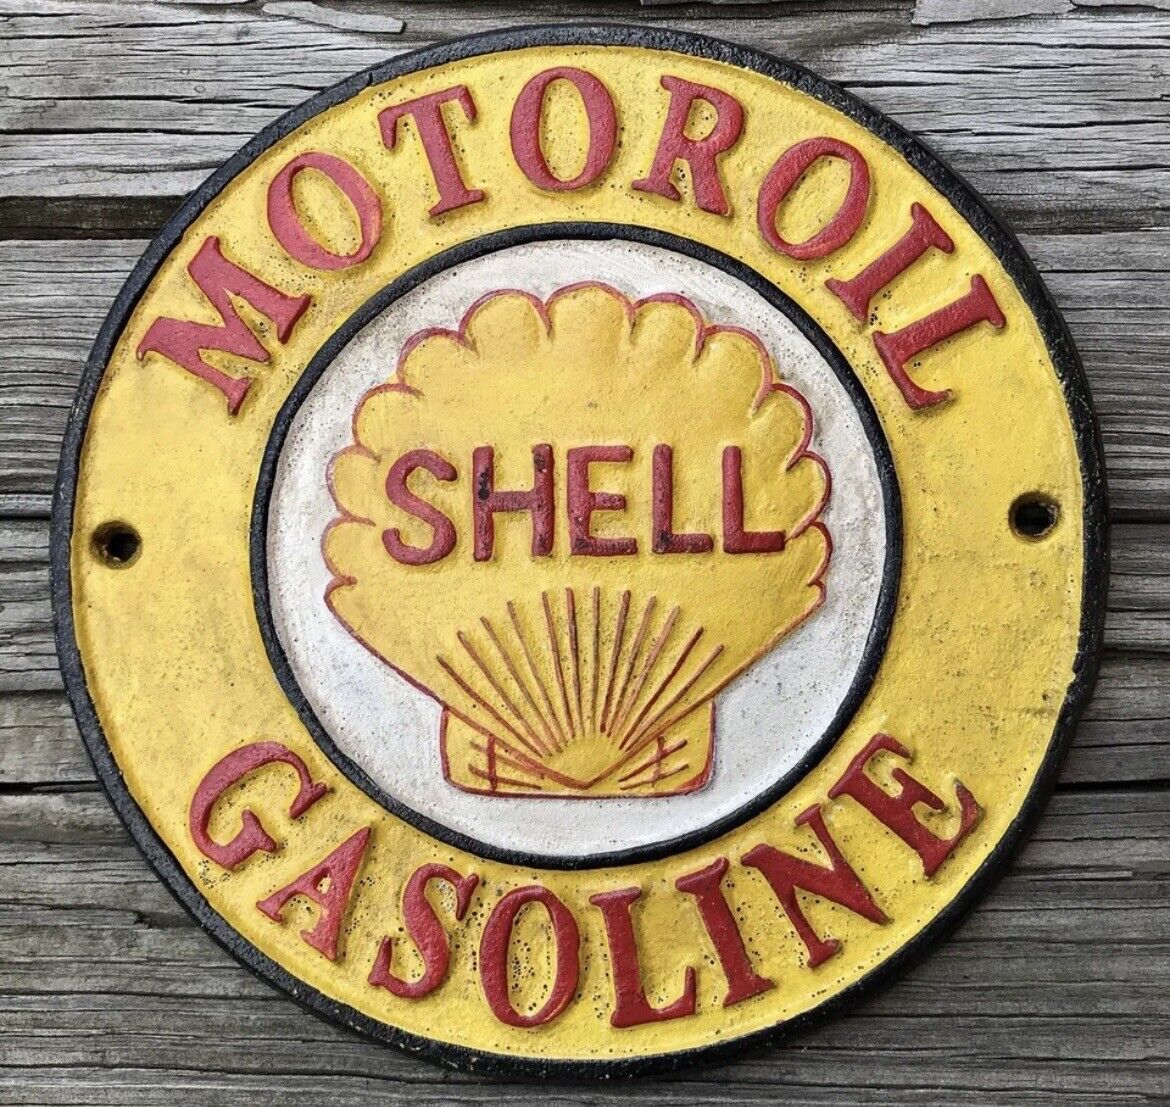 SHELL Motor Oil / Gasoline, London 1937, Cast Iron 8” Circular Sign